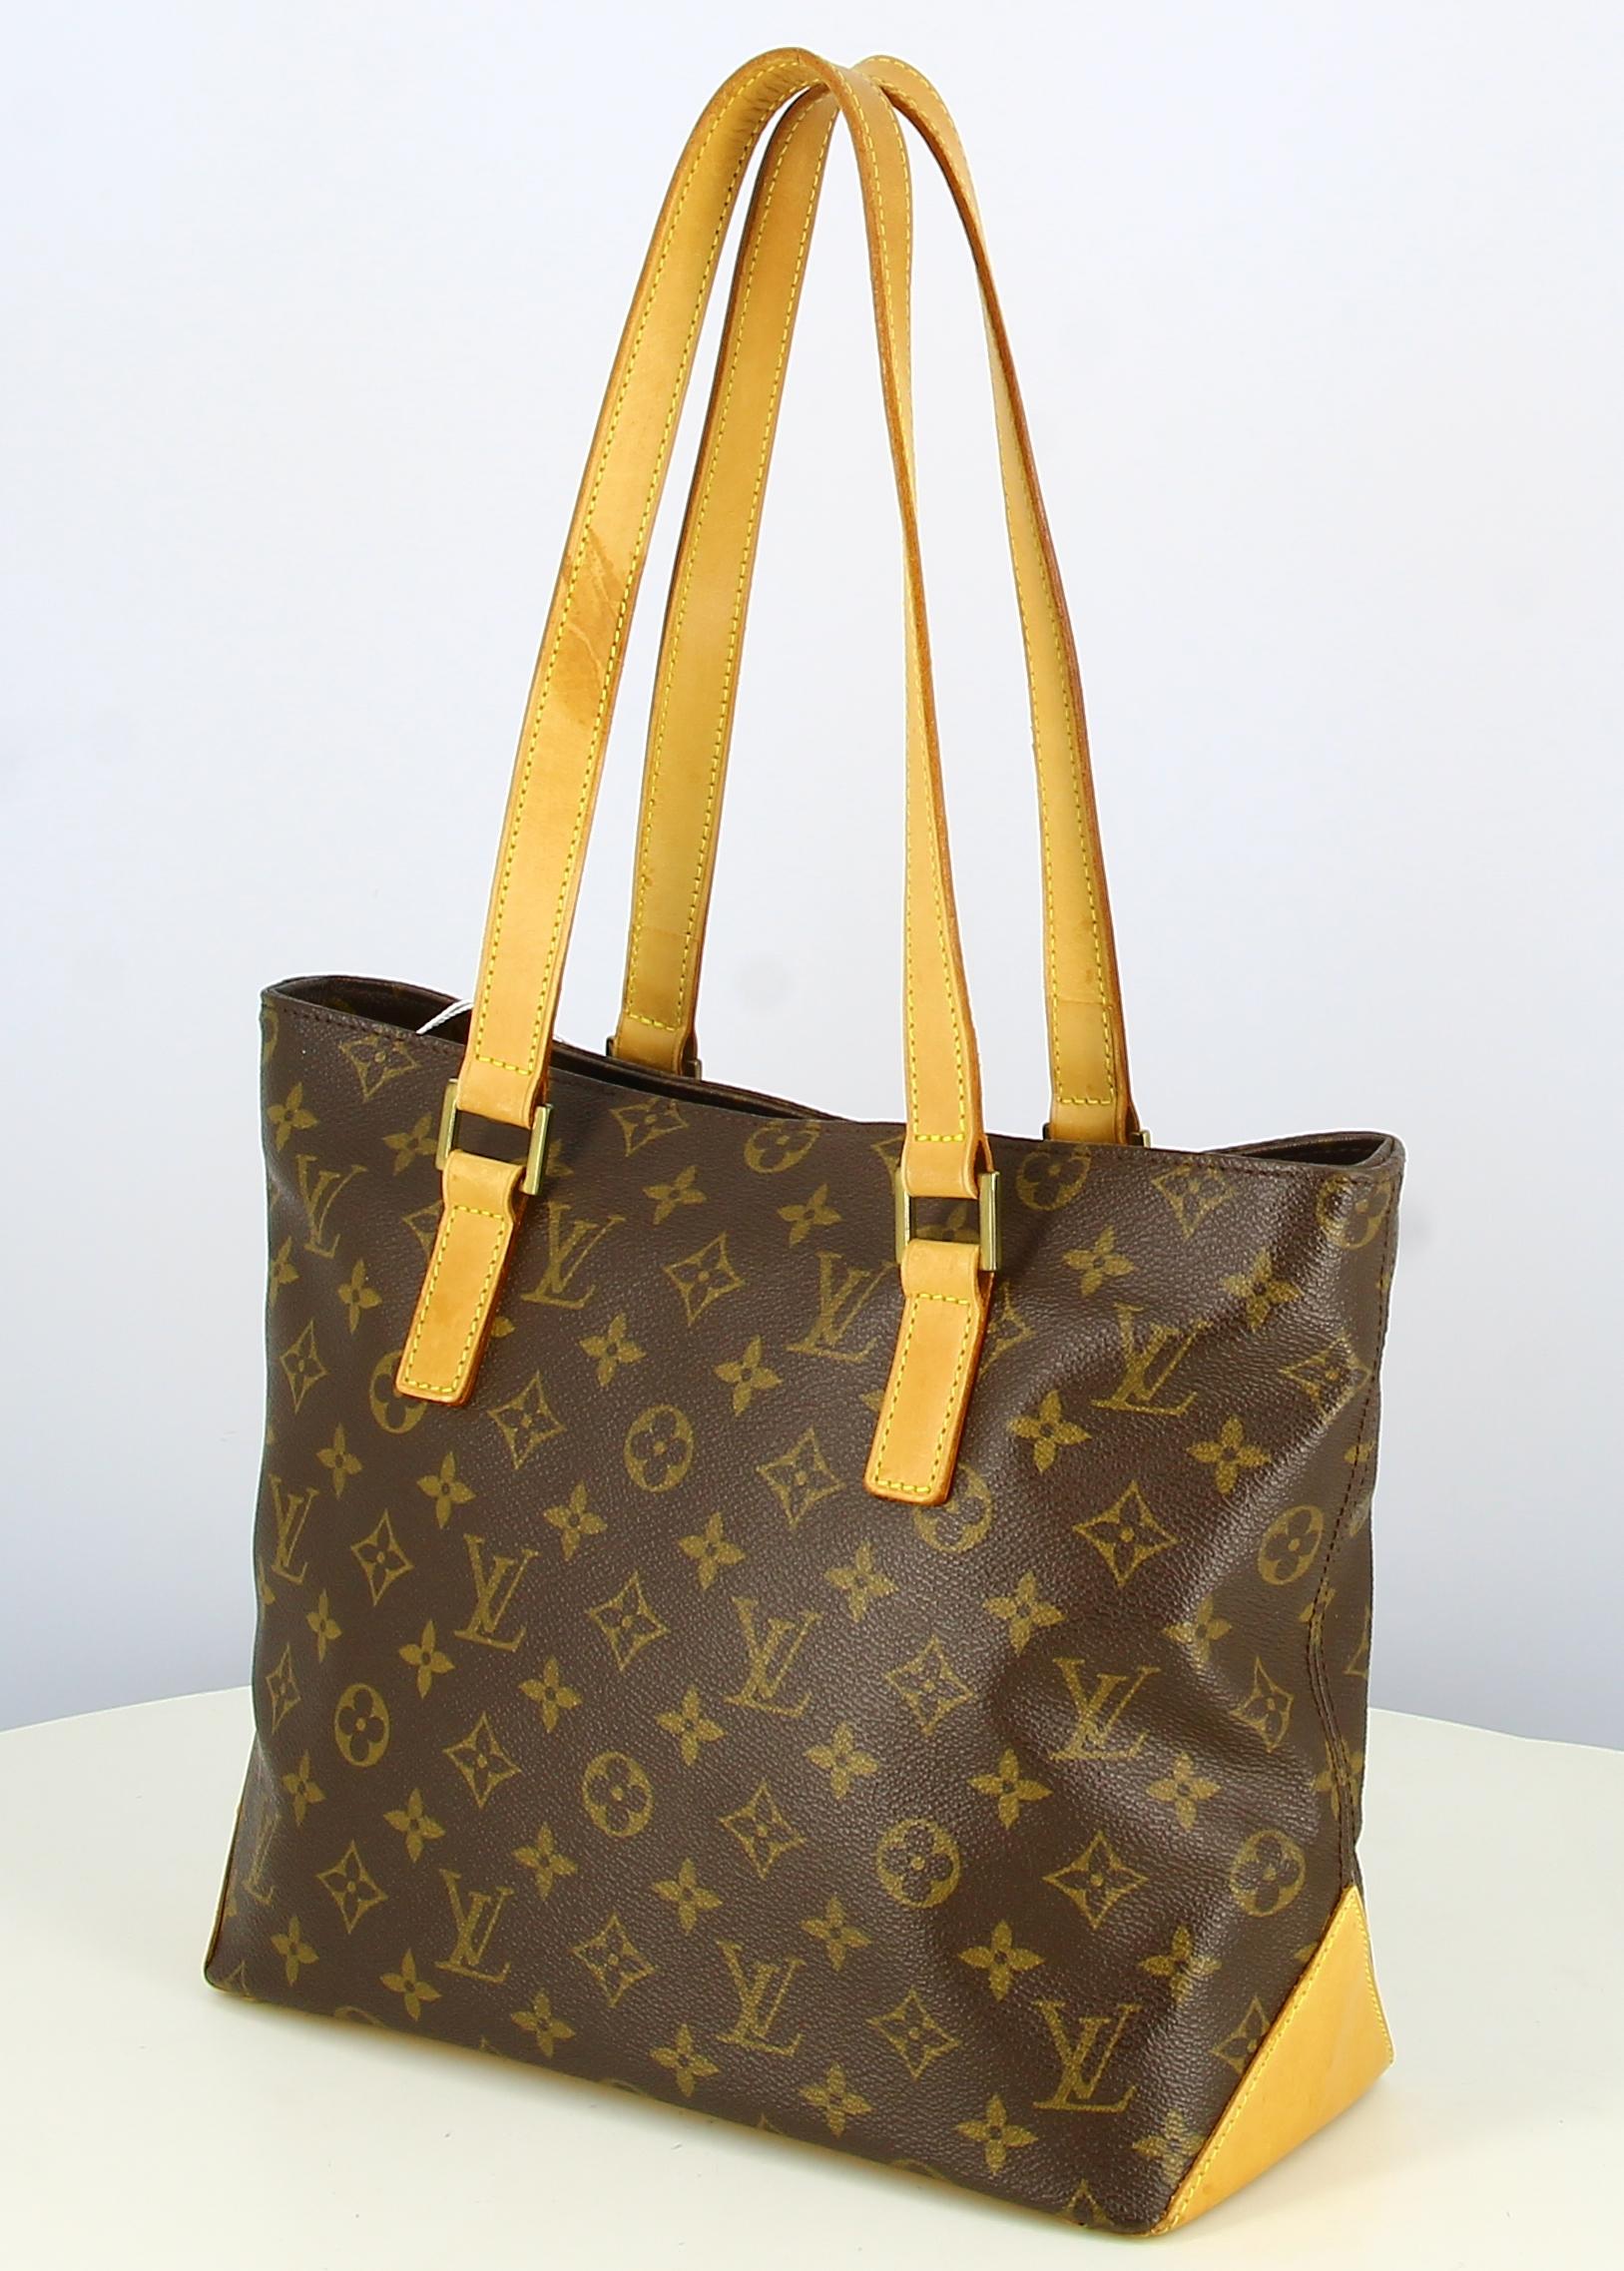 2002 Louis Vuitton Monogram Canvas Handbag  In Good Condition For Sale In PARIS, FR